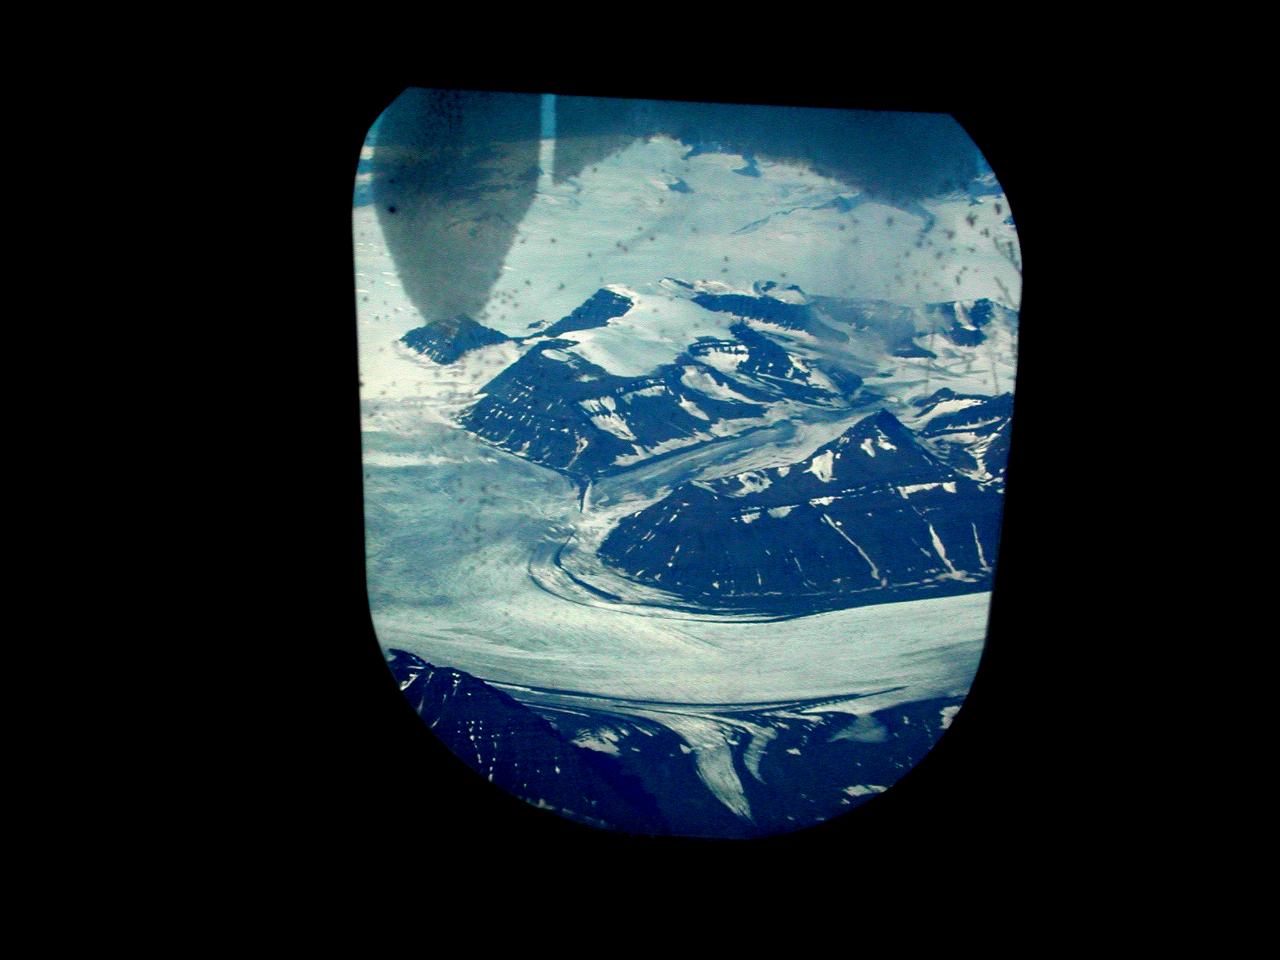 KPLU Viking Jazz: A glacier in Greenland